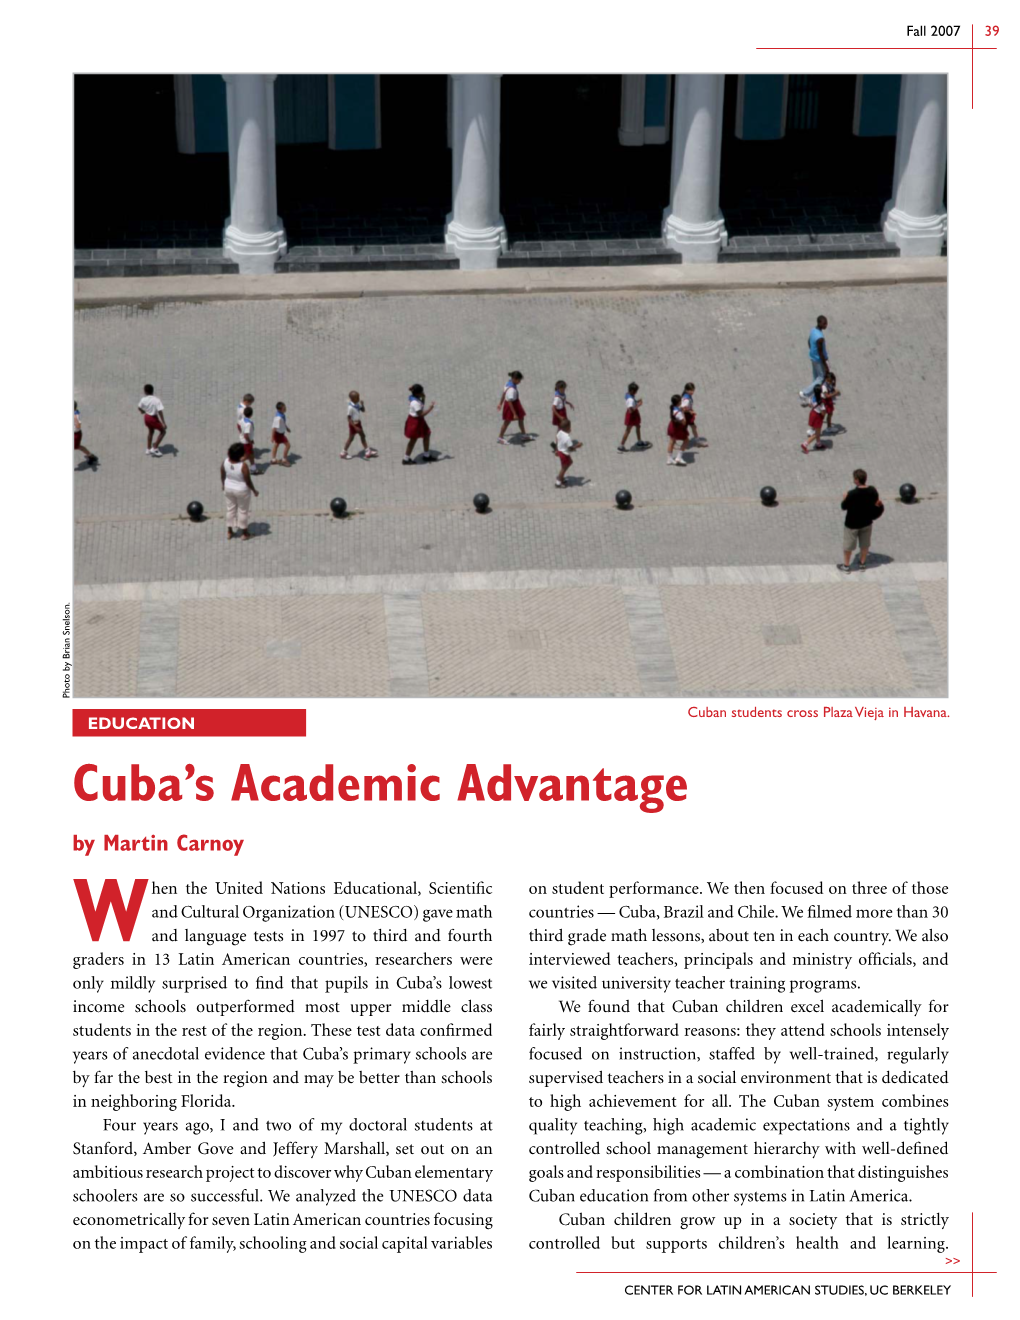 Cuba's Academic Advantage